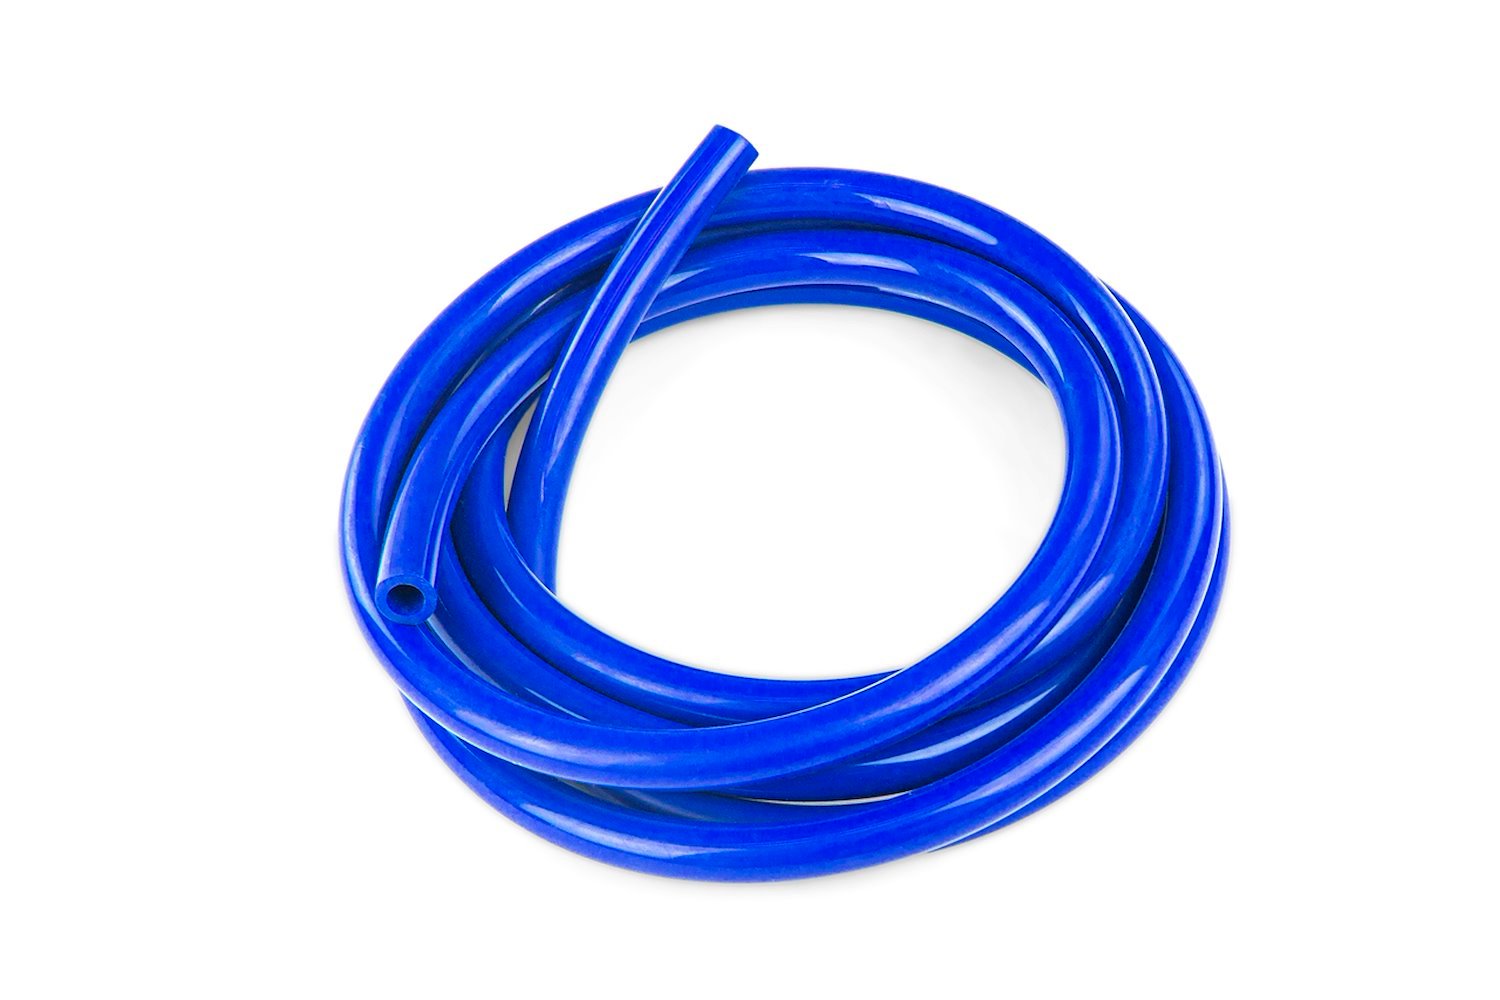 HTSVH6-BLUEx25 High-Temperature Silicone Vacuum Hose Tubing, 1/4 in. ID, 25 ft. Roll, Blue